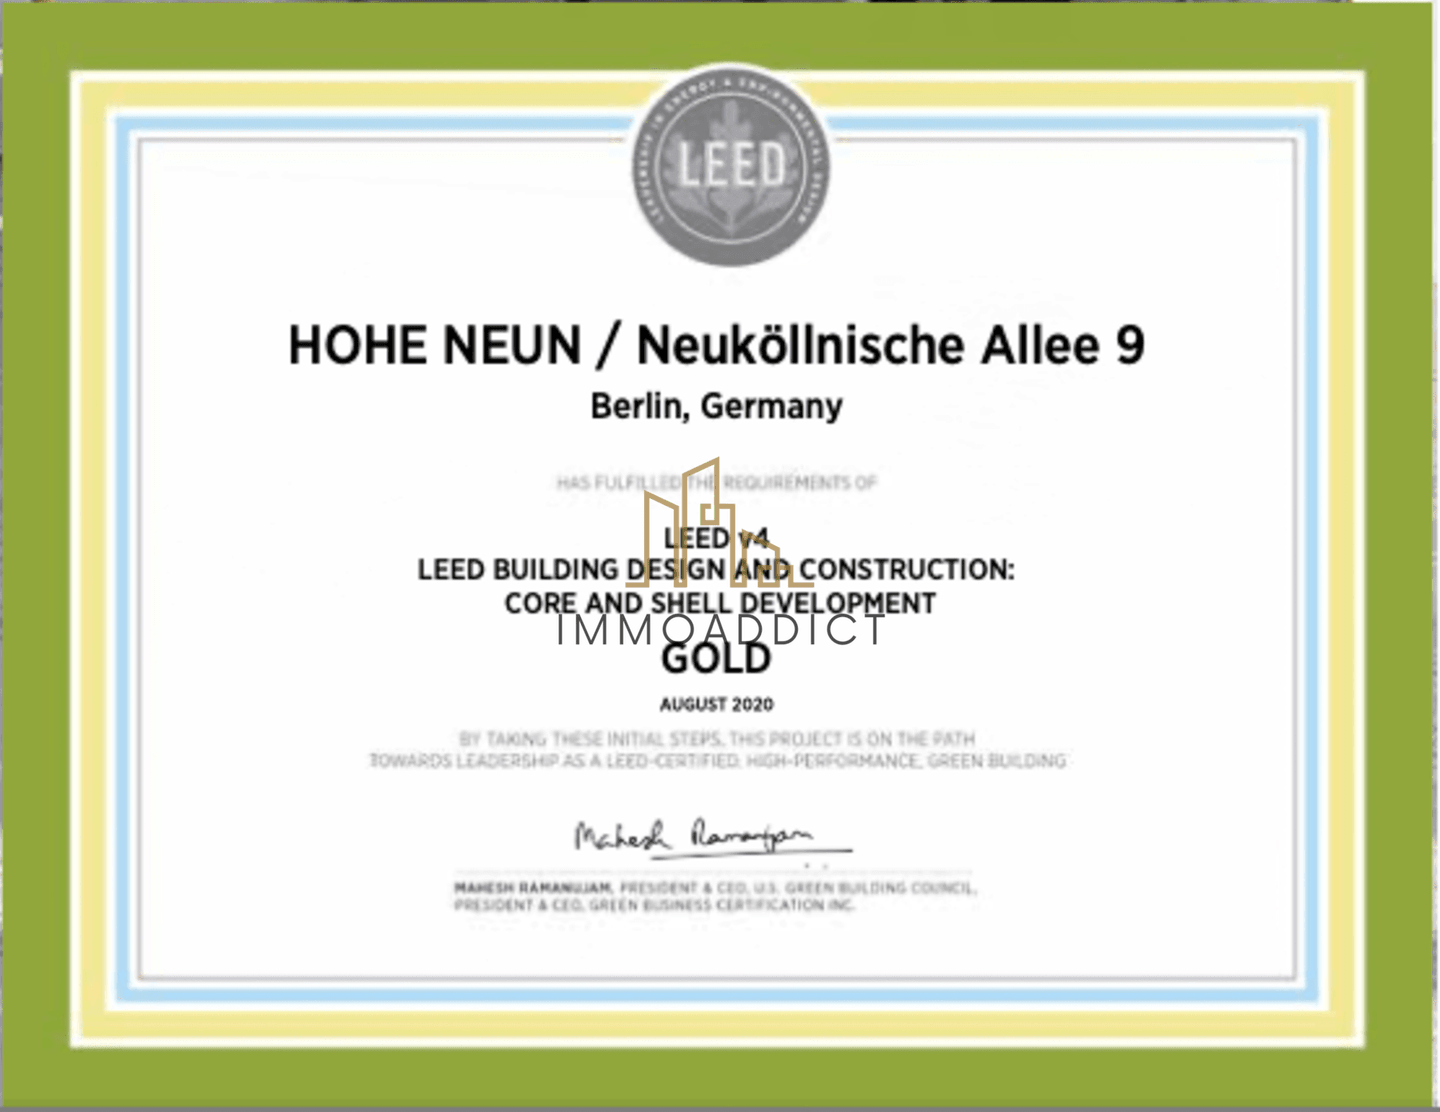 Hohe Neun - LEED GOLD Siegel
				